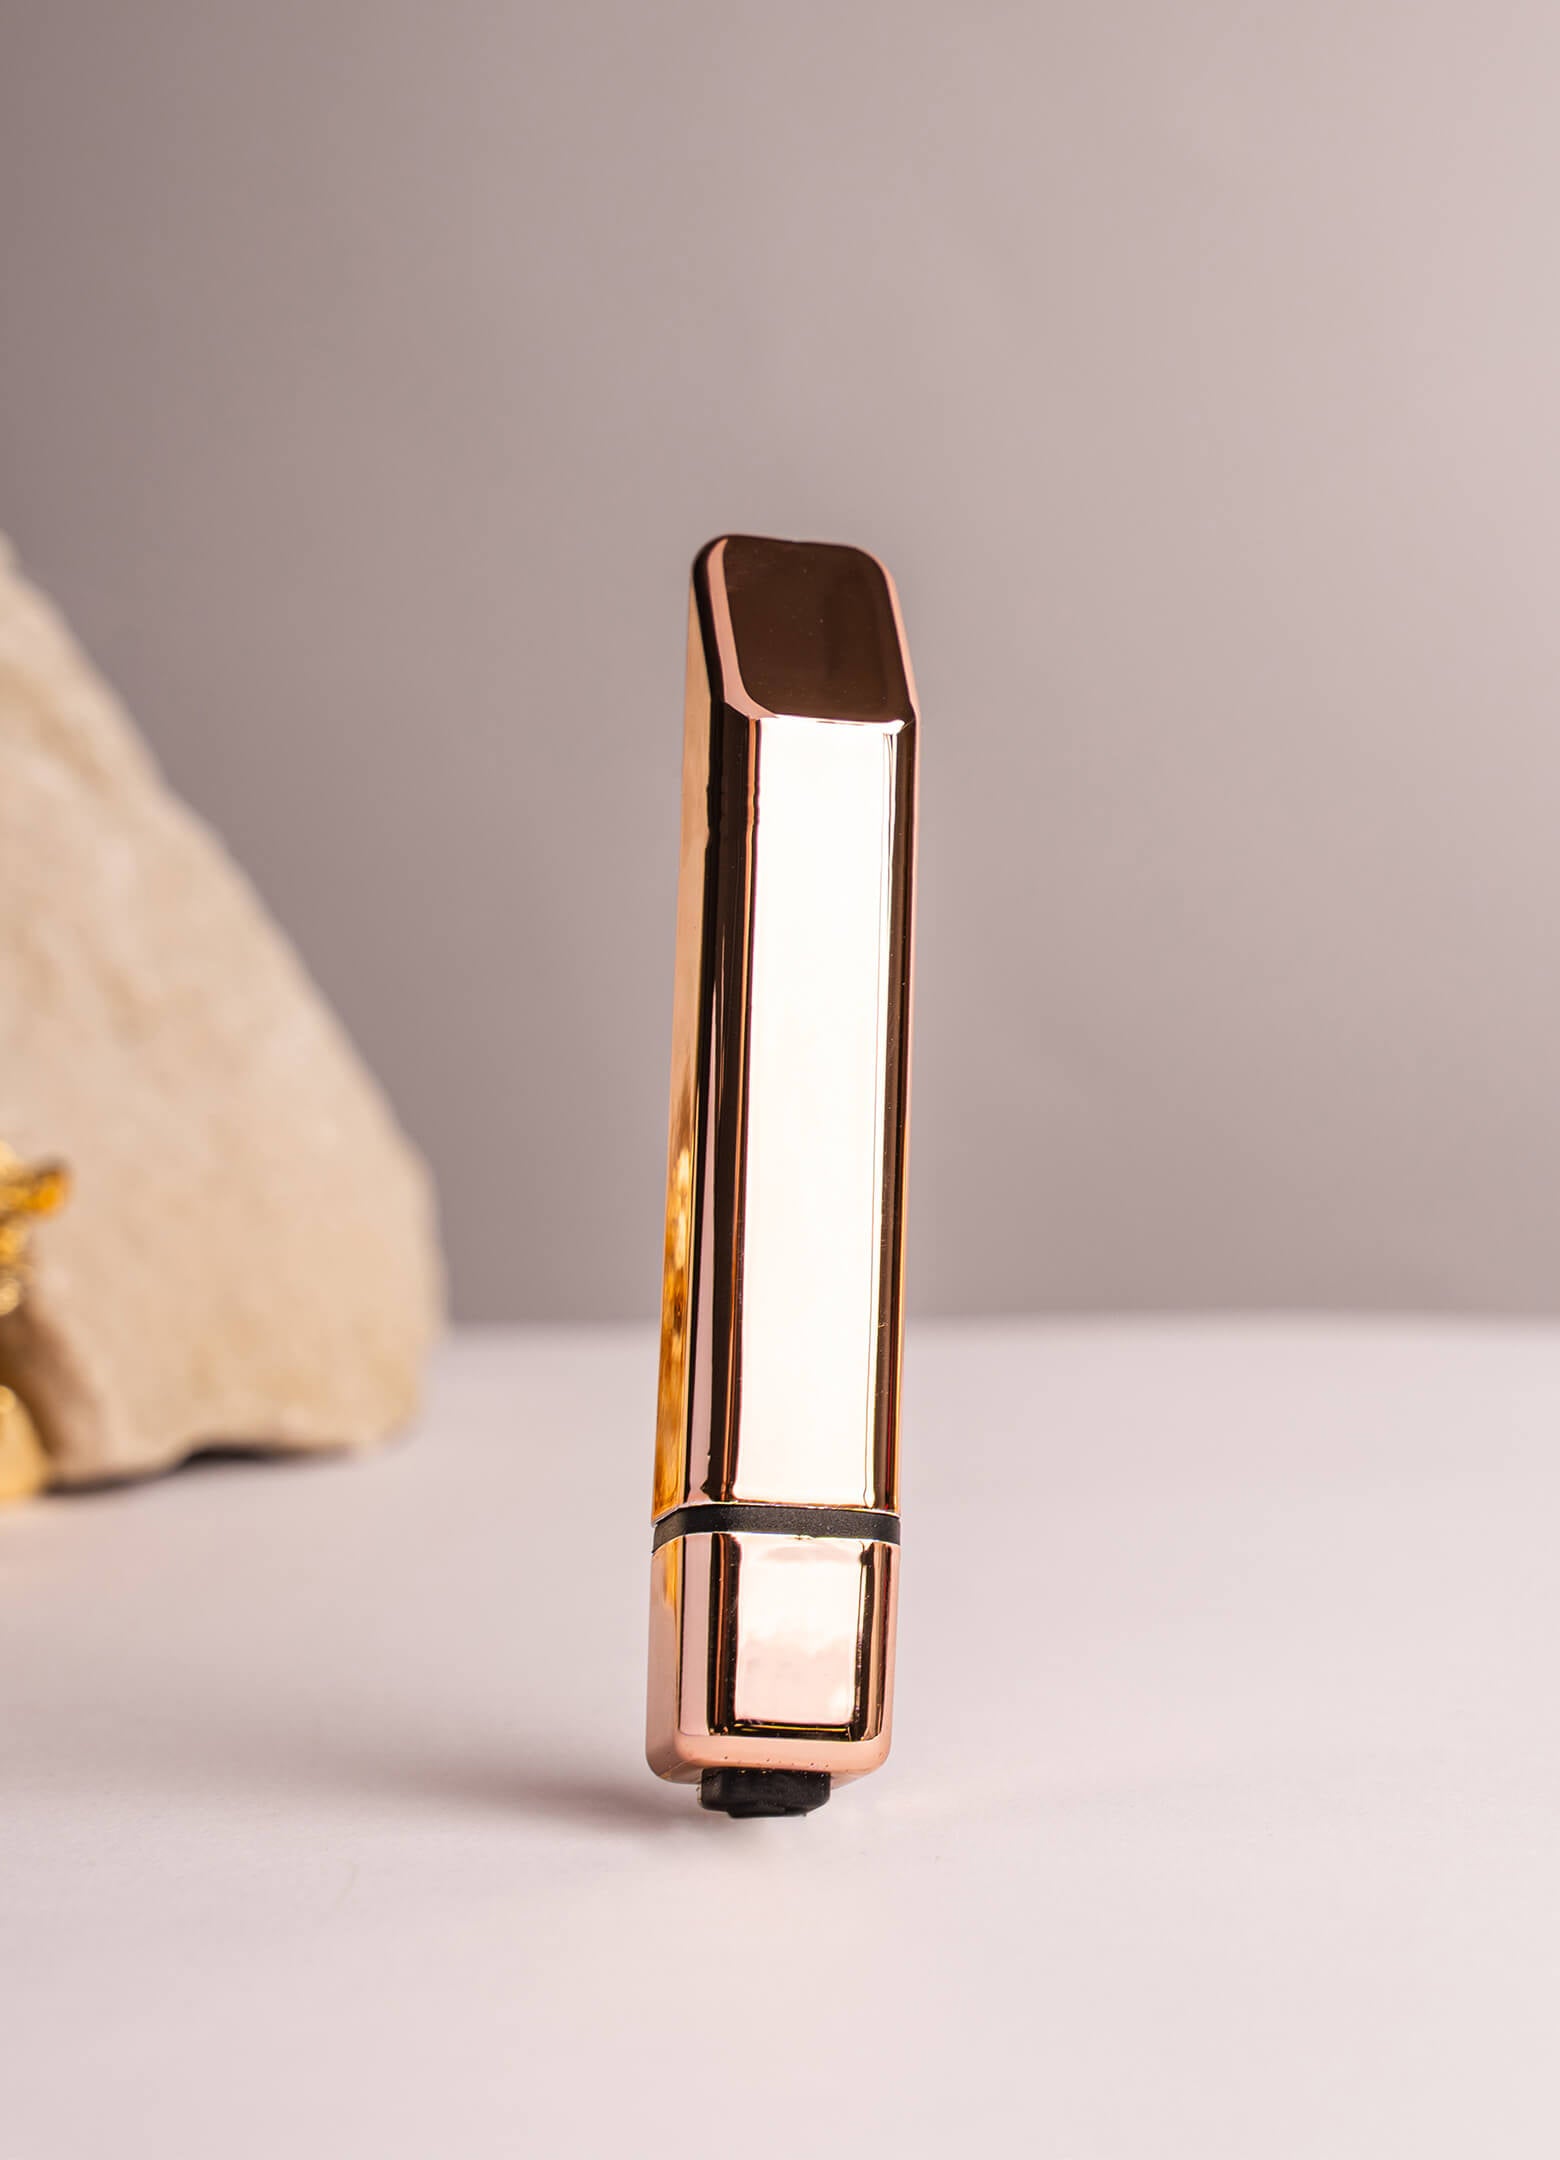 Small glossy gold vibrator designed like a lipstick.